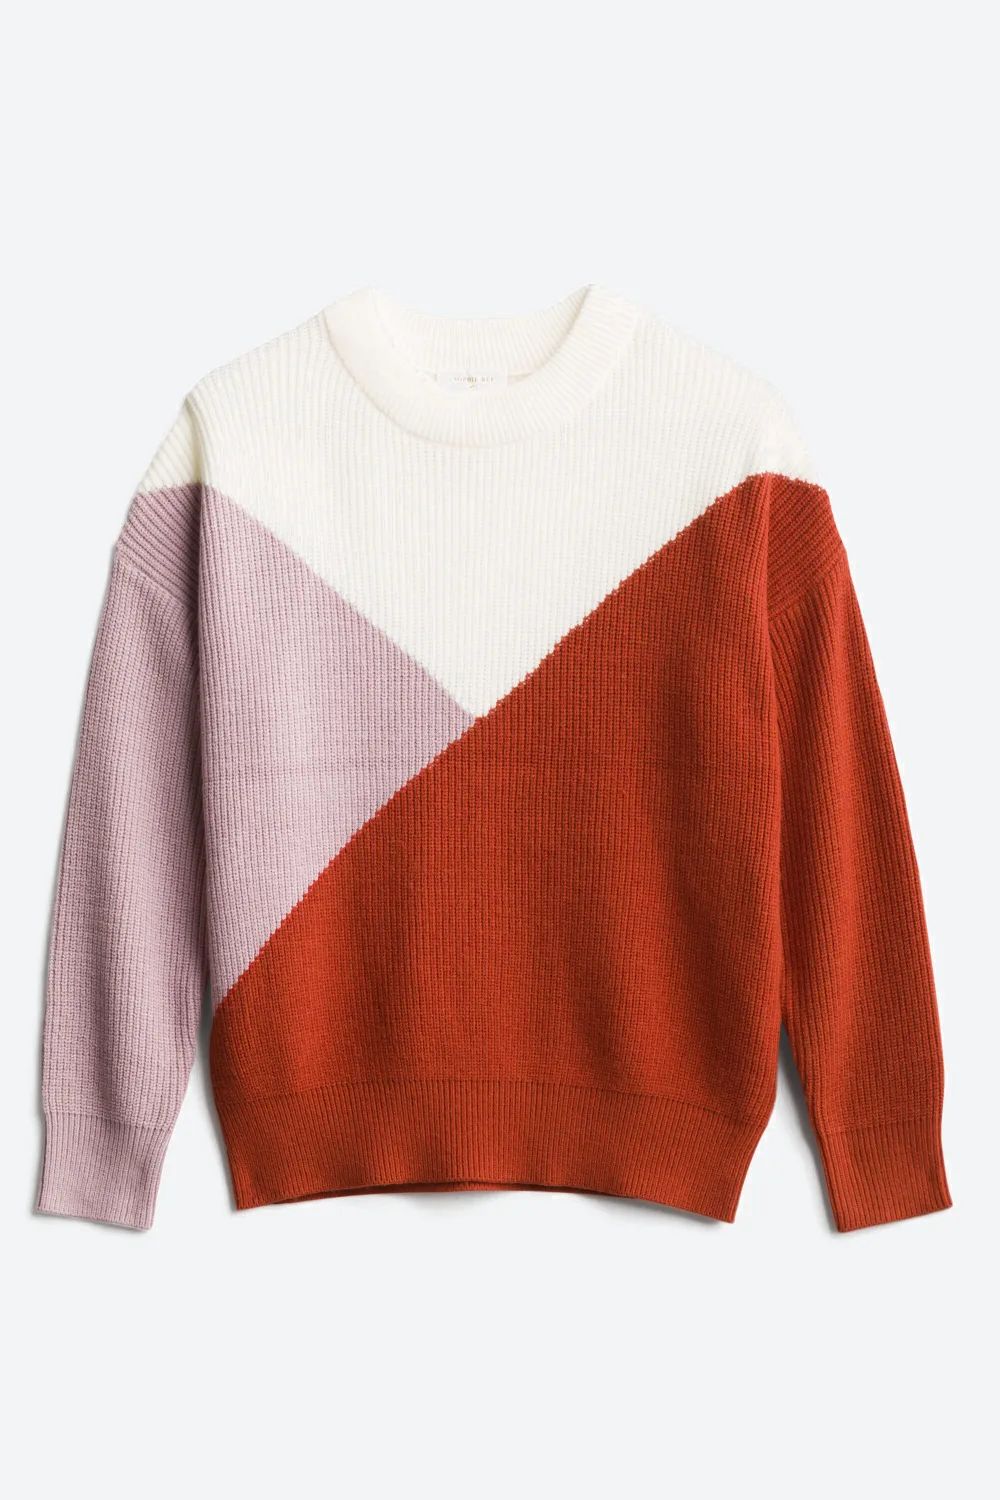 Karmiti Diagonal Colorblock Sweater | Stitch Fix